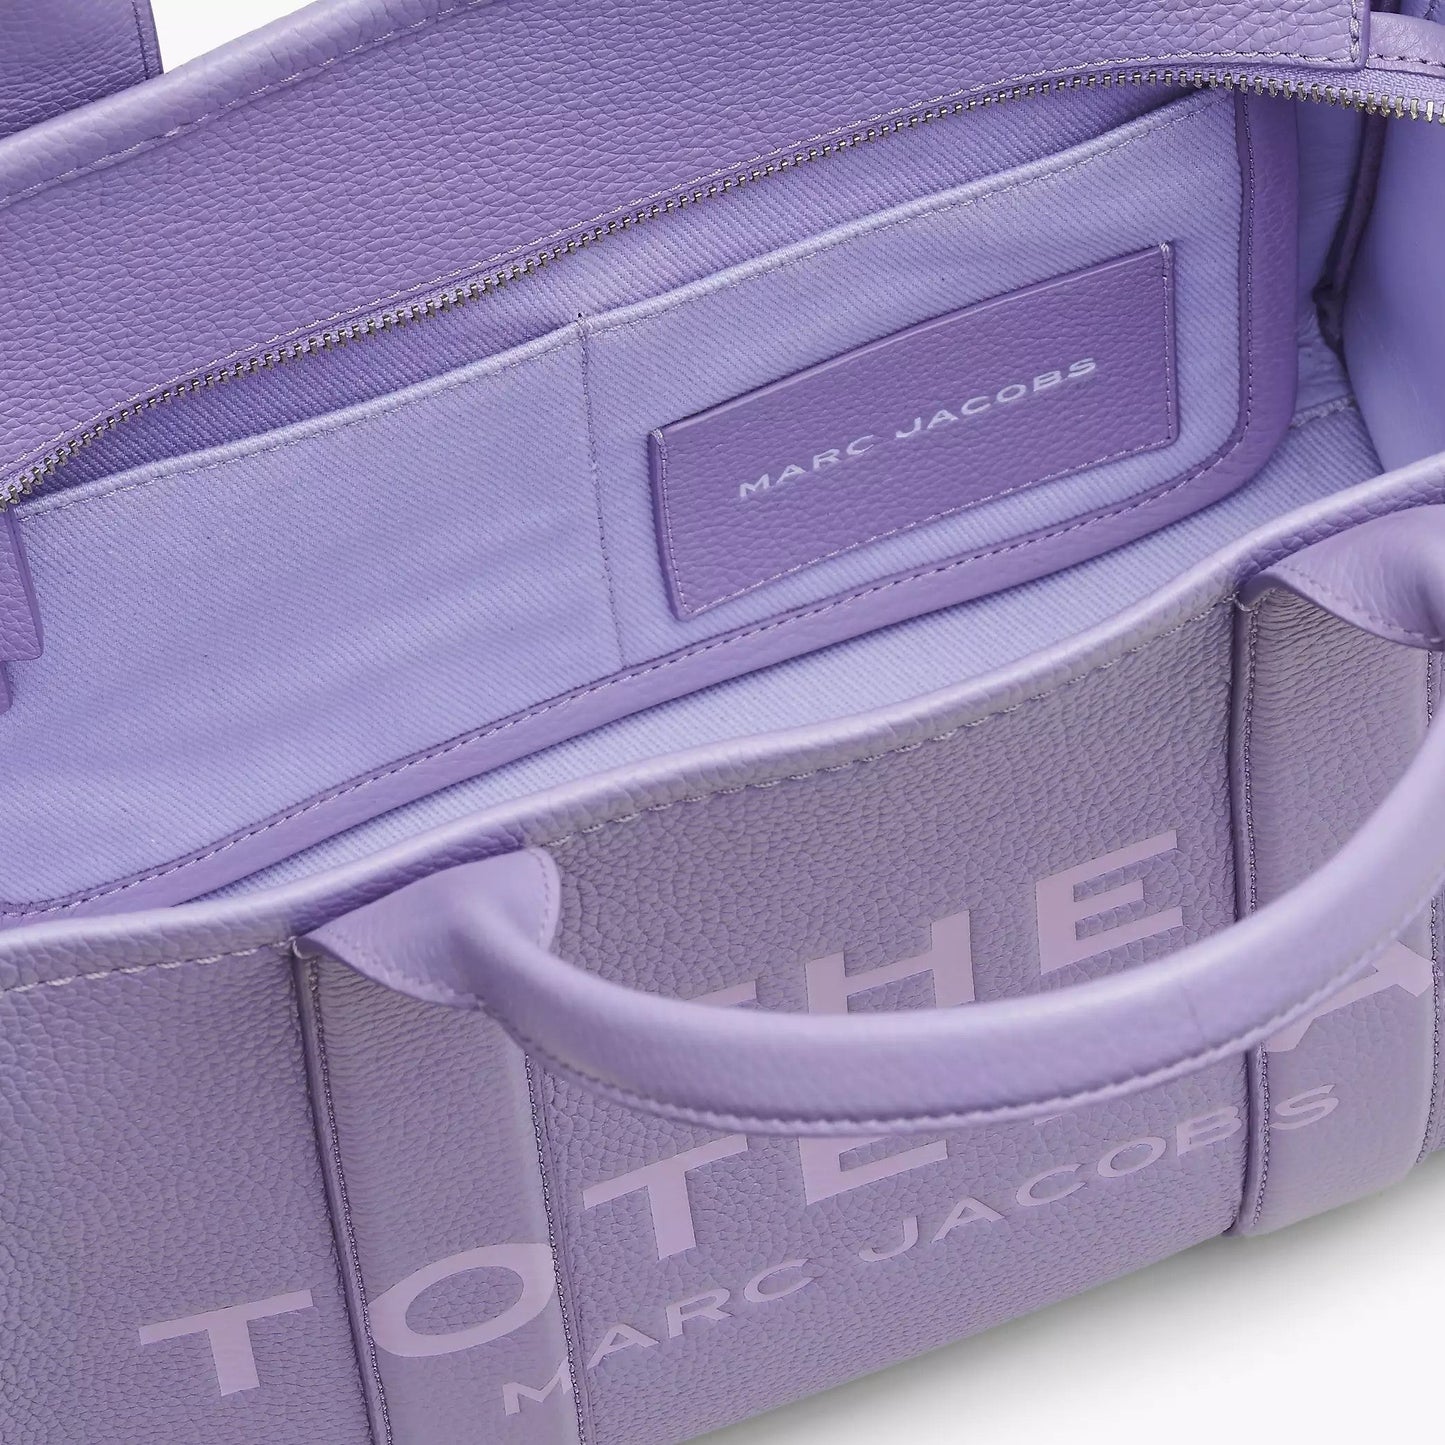 The Leather Medium Tote Bag in Lavender Handbags MARC JACOBS - LOLAMIR